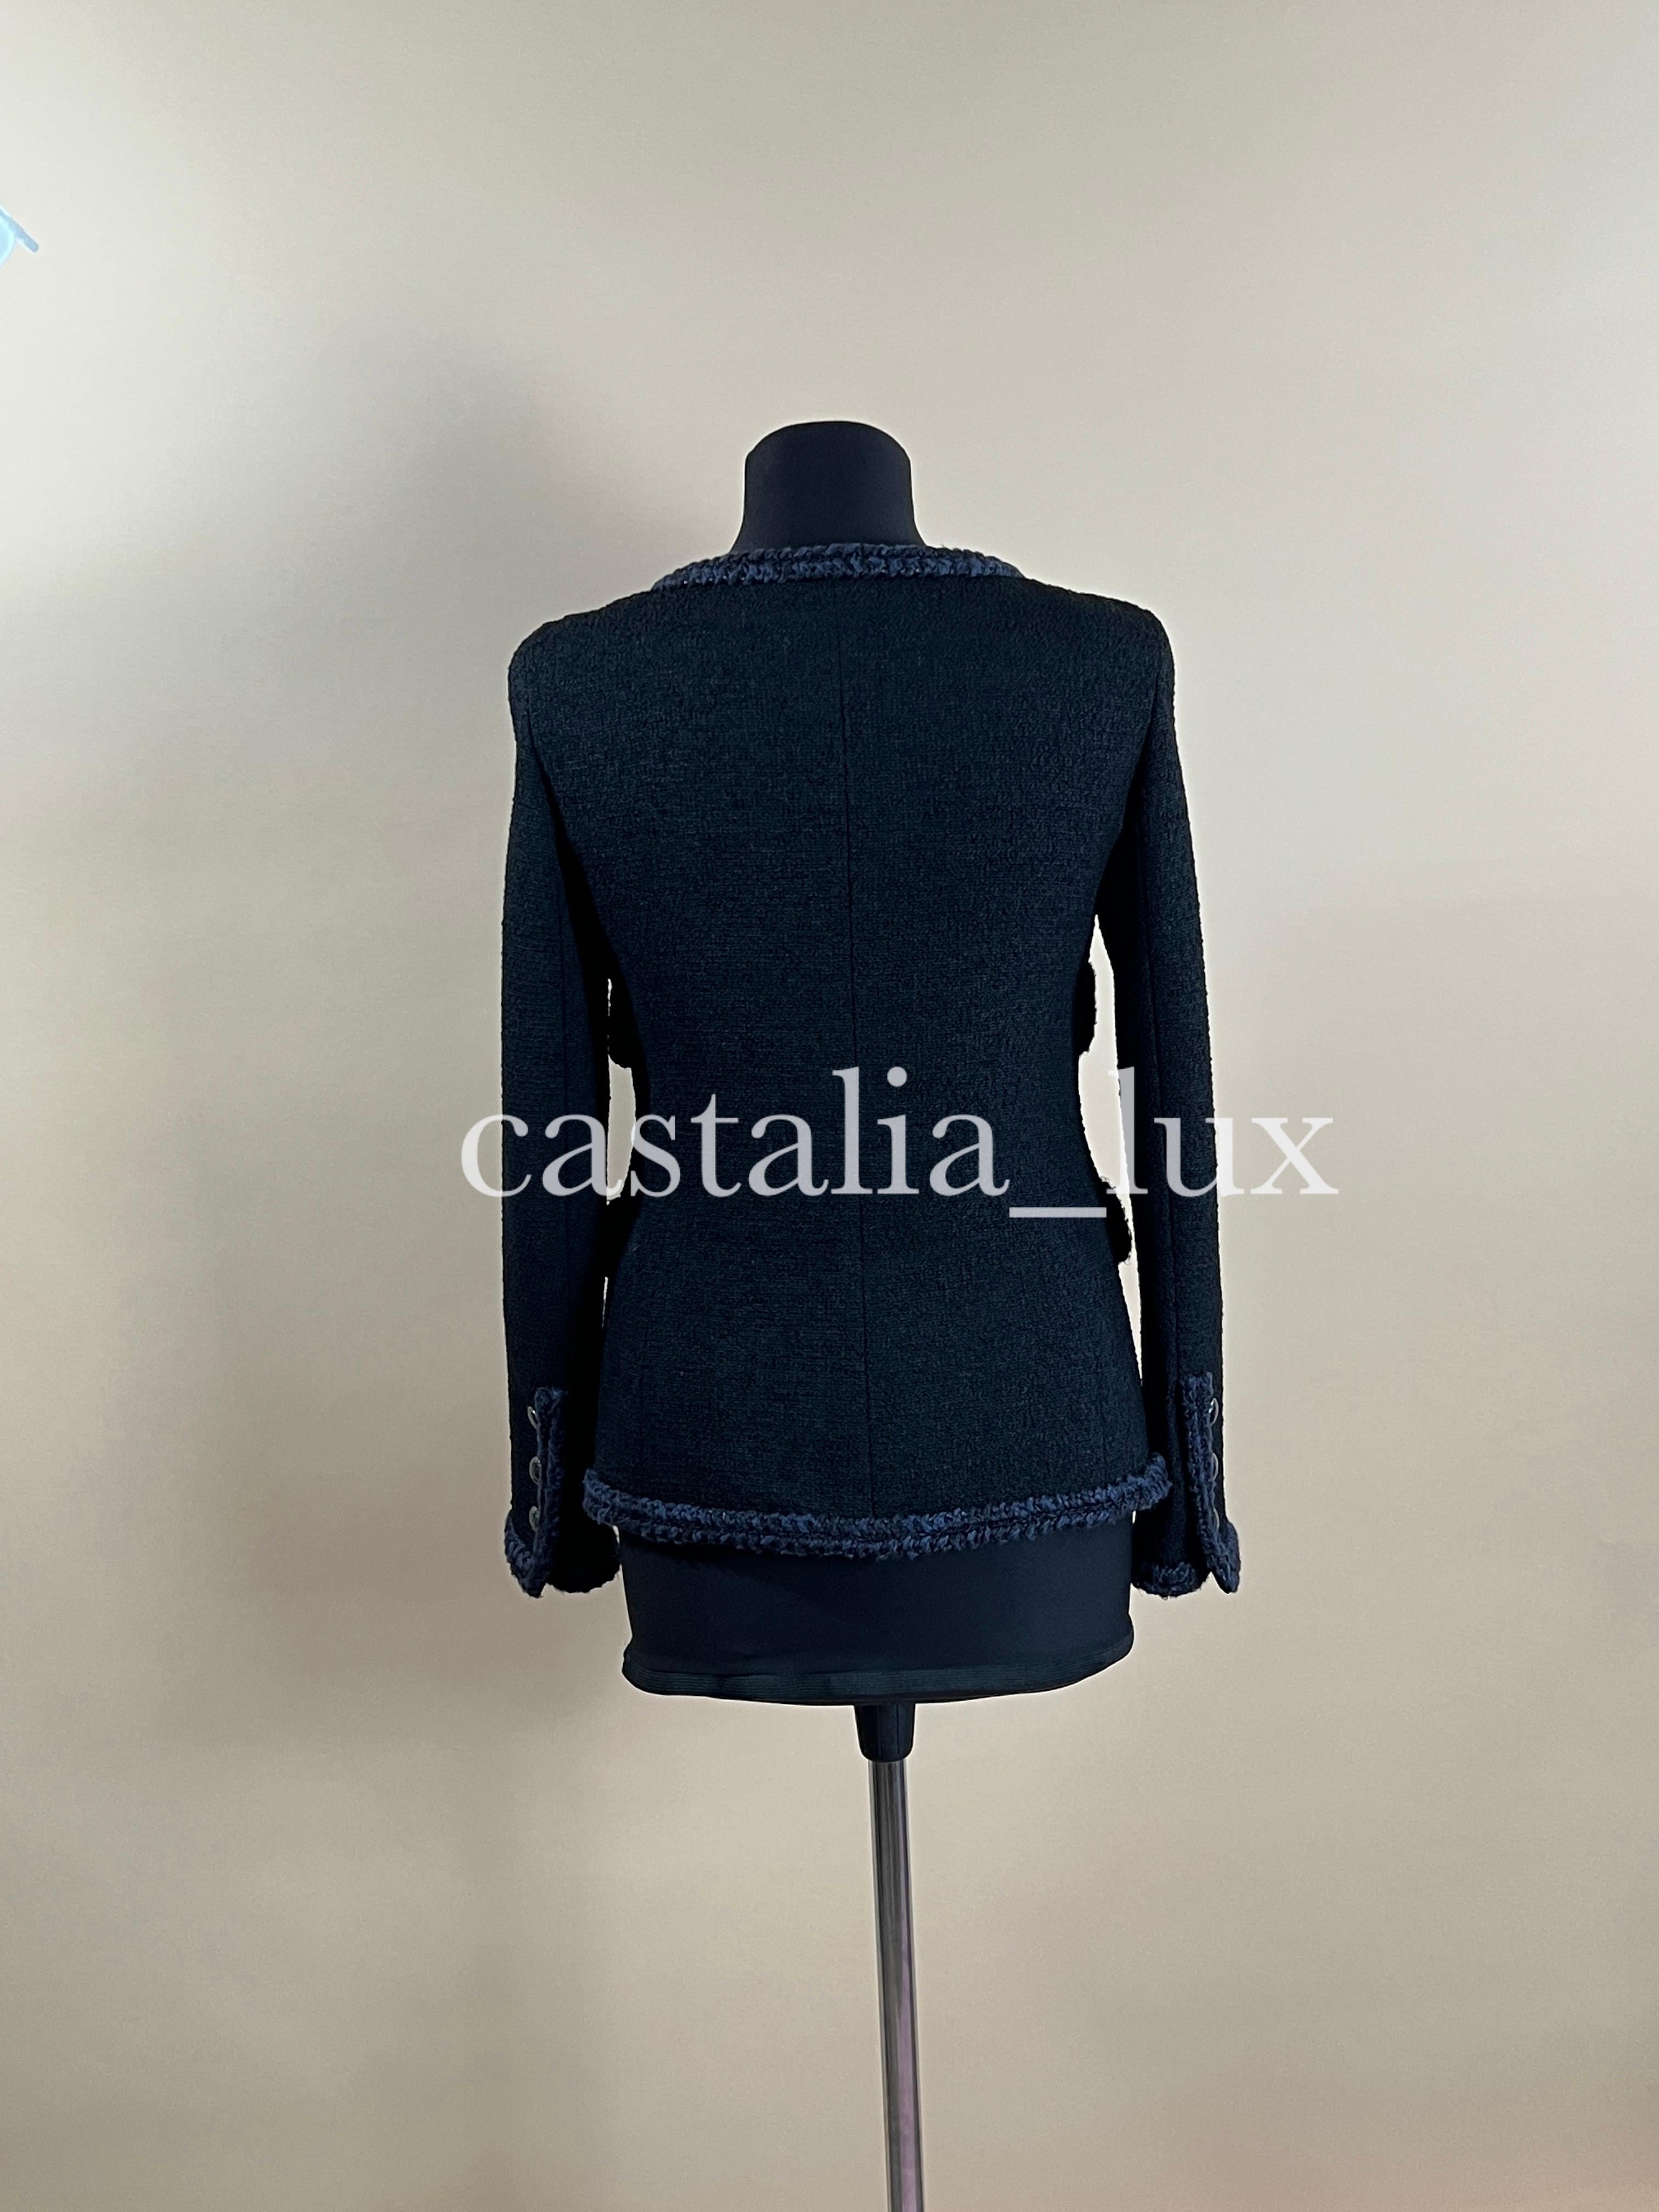 Chanel Iconic Keira Knightley Style Black Tweed Jacket 9